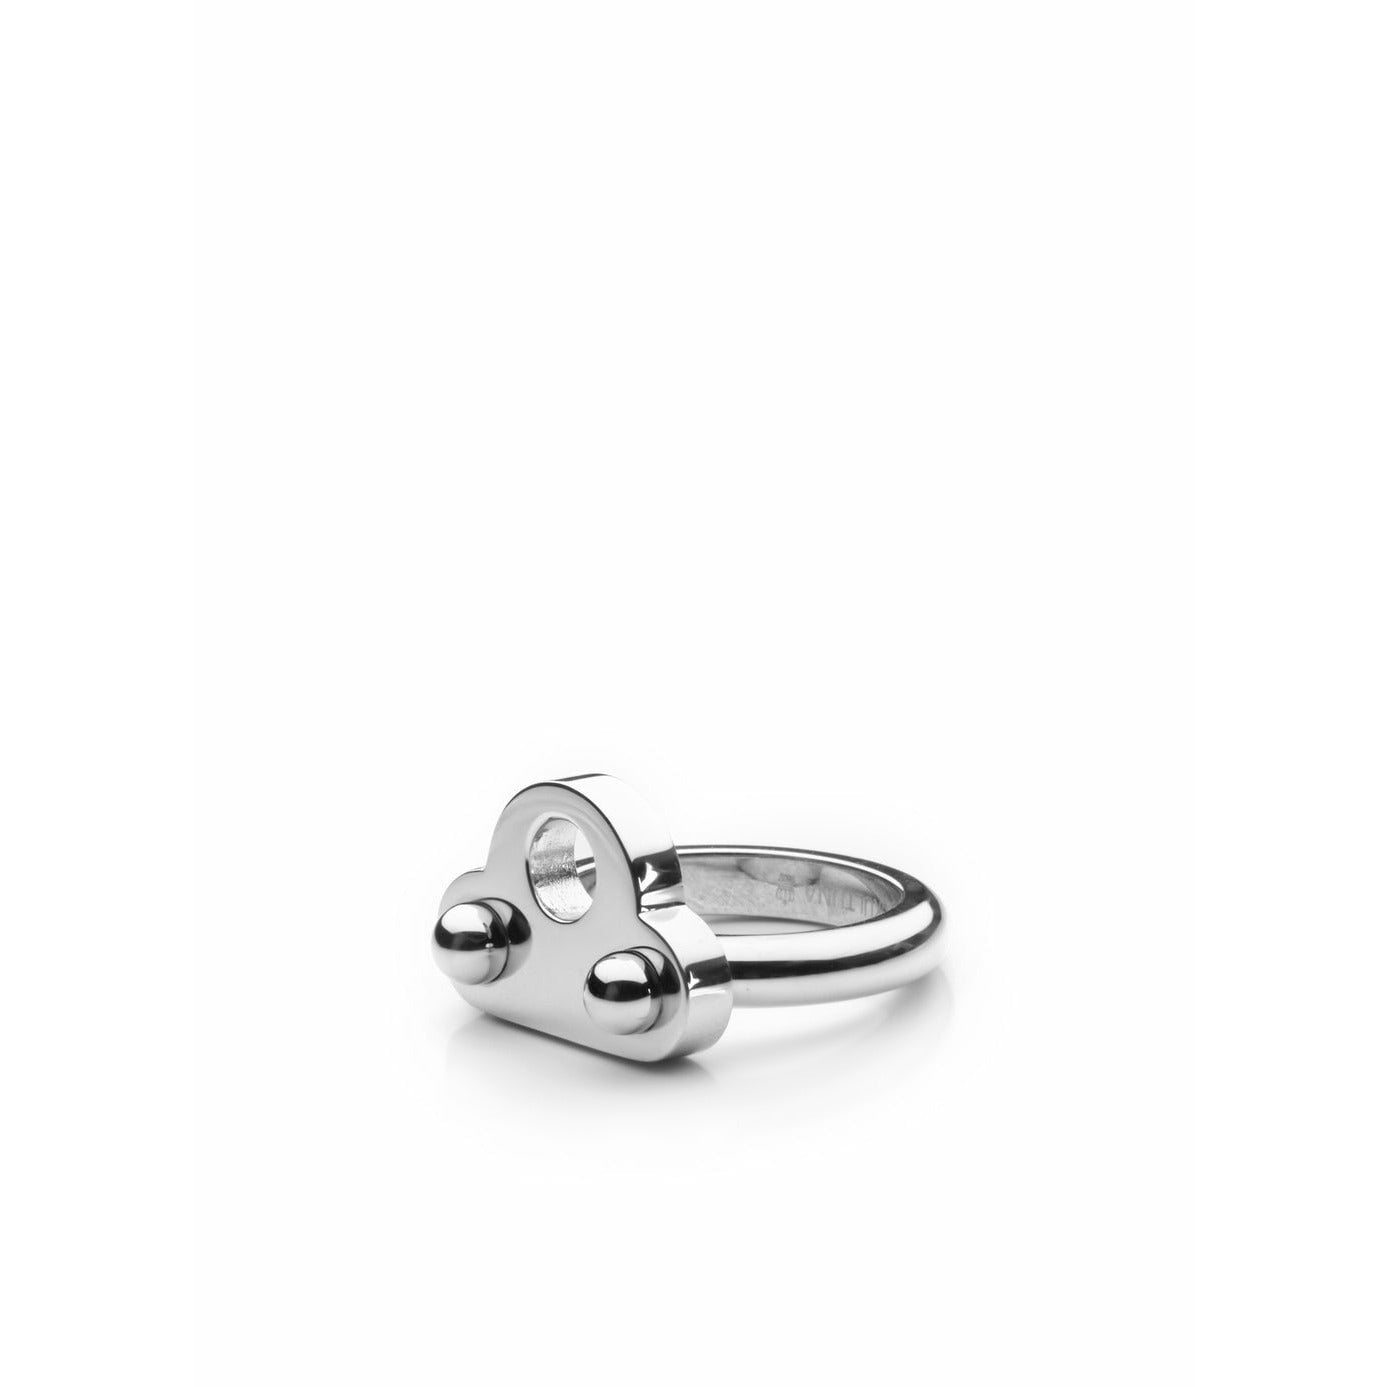 Skultuna Key Ring Ring de acero pulido pequeño, Ø1,6 cm